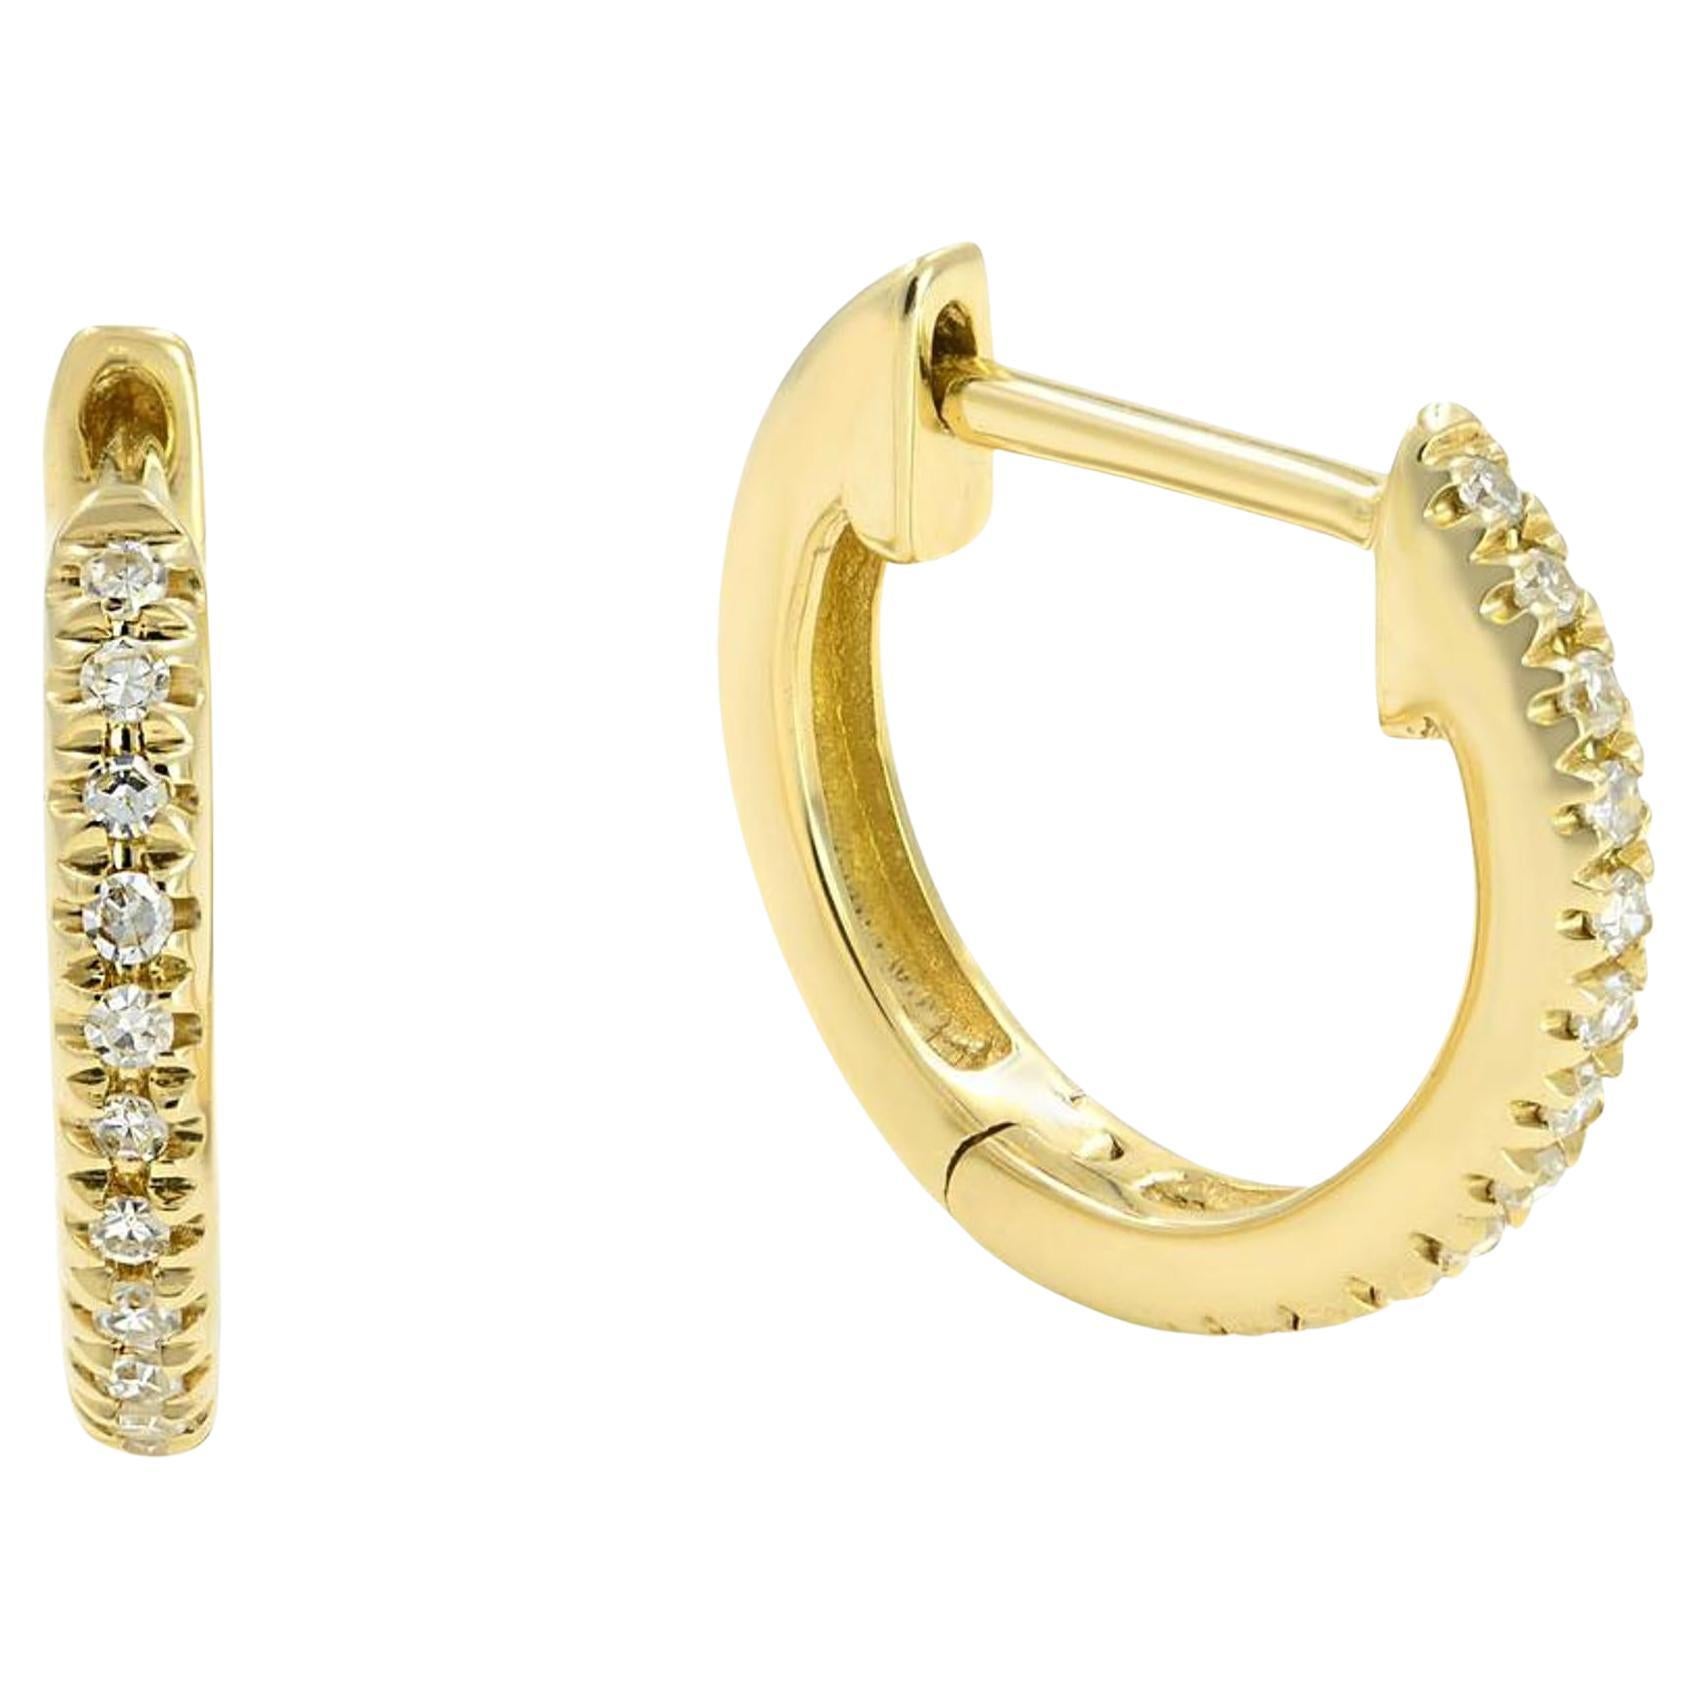 Rachel Koen Pave Diamond Huggie Earrings 14K Yellow Gold 0.08Cttw For Sale